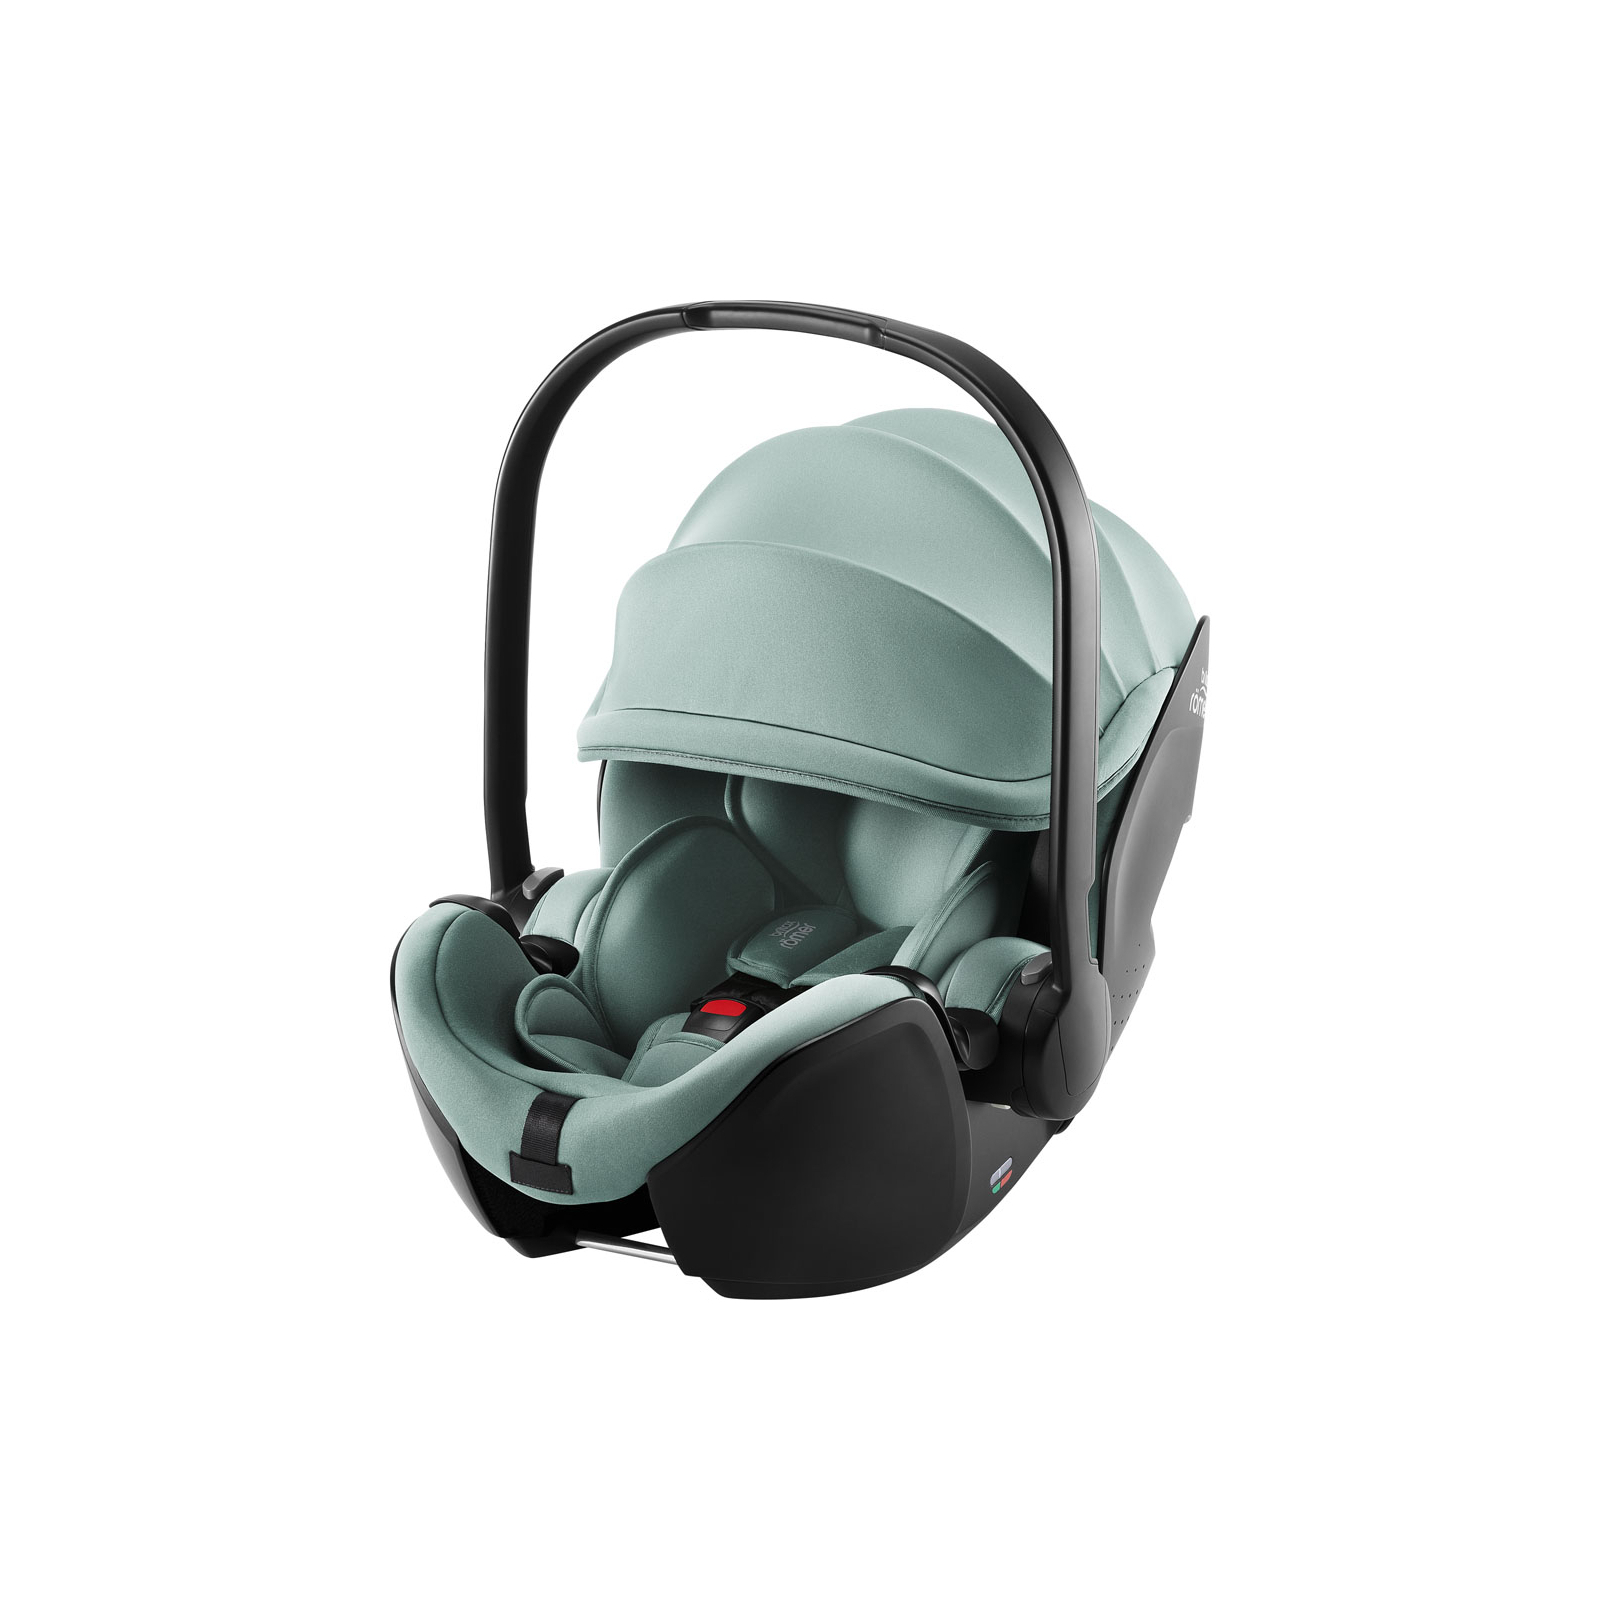 Автокрісло Britax-Romer Baby-Safe Pro Jade Green (2000040138)